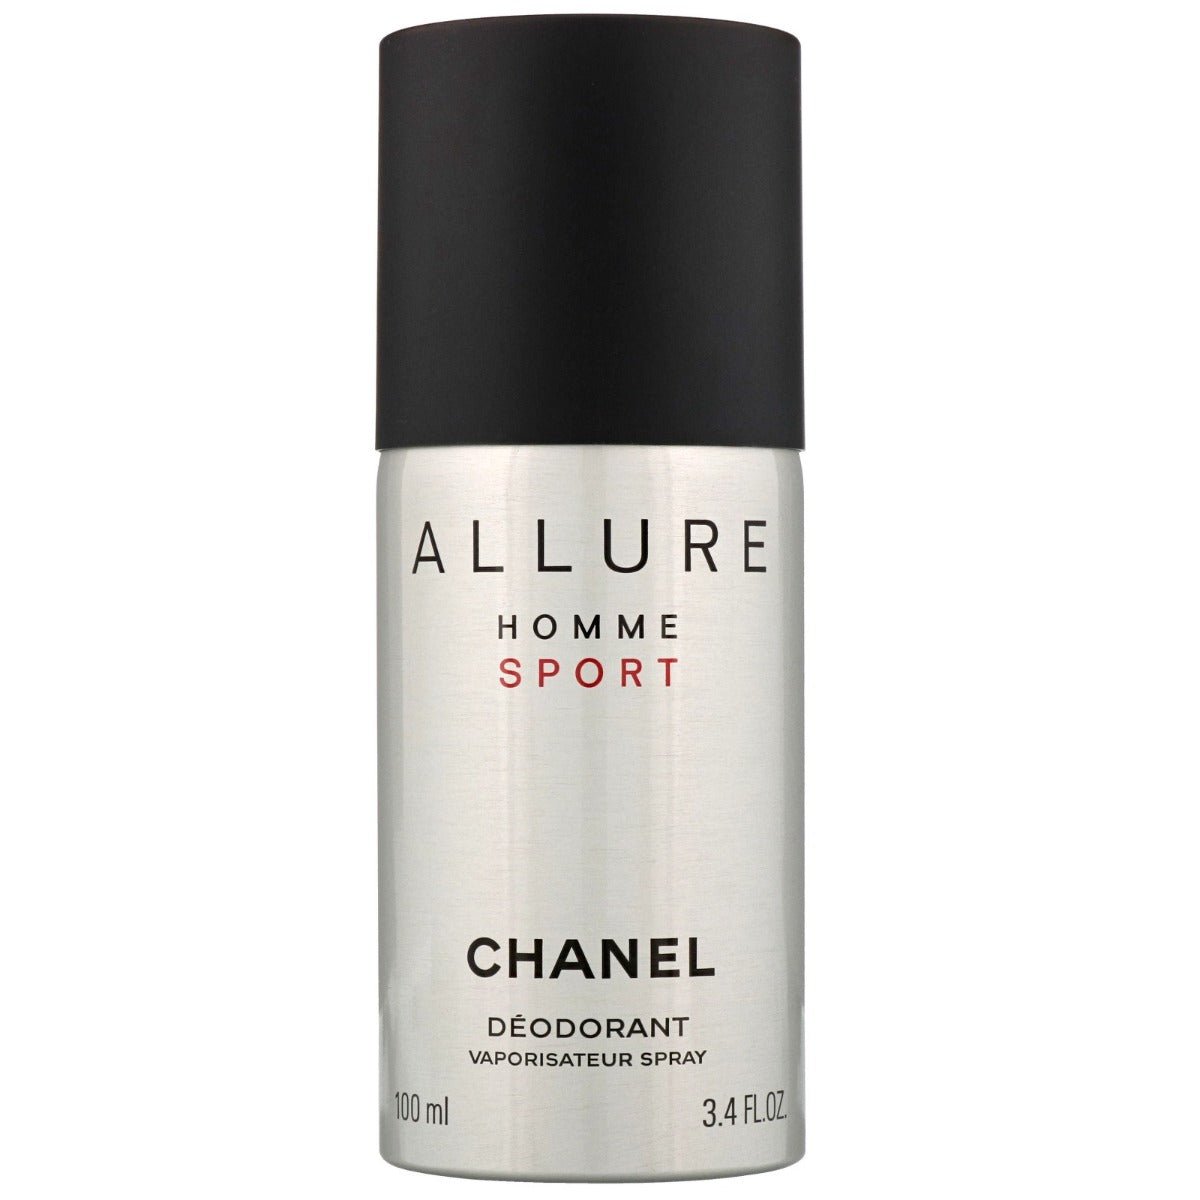 Chanel Allure homme Sport Deodorant 100Ml - AllurebeautypkChanel Allure homme Sport Deodorant 100Ml